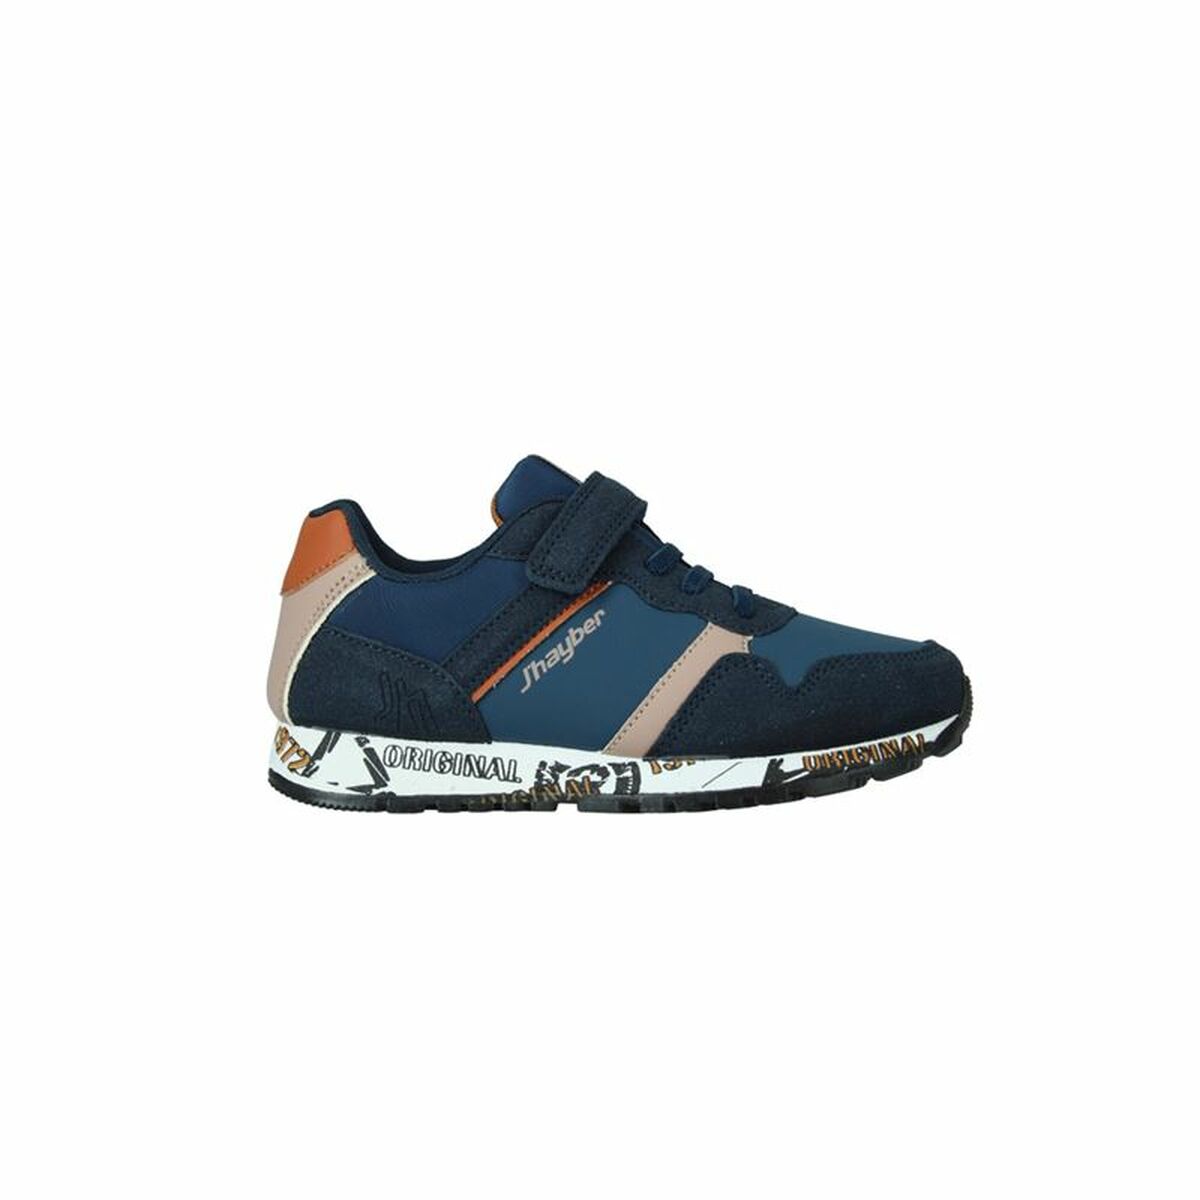 Chaussures de Sport pour Homme J-Hayber Chinasa Navy Blue marine